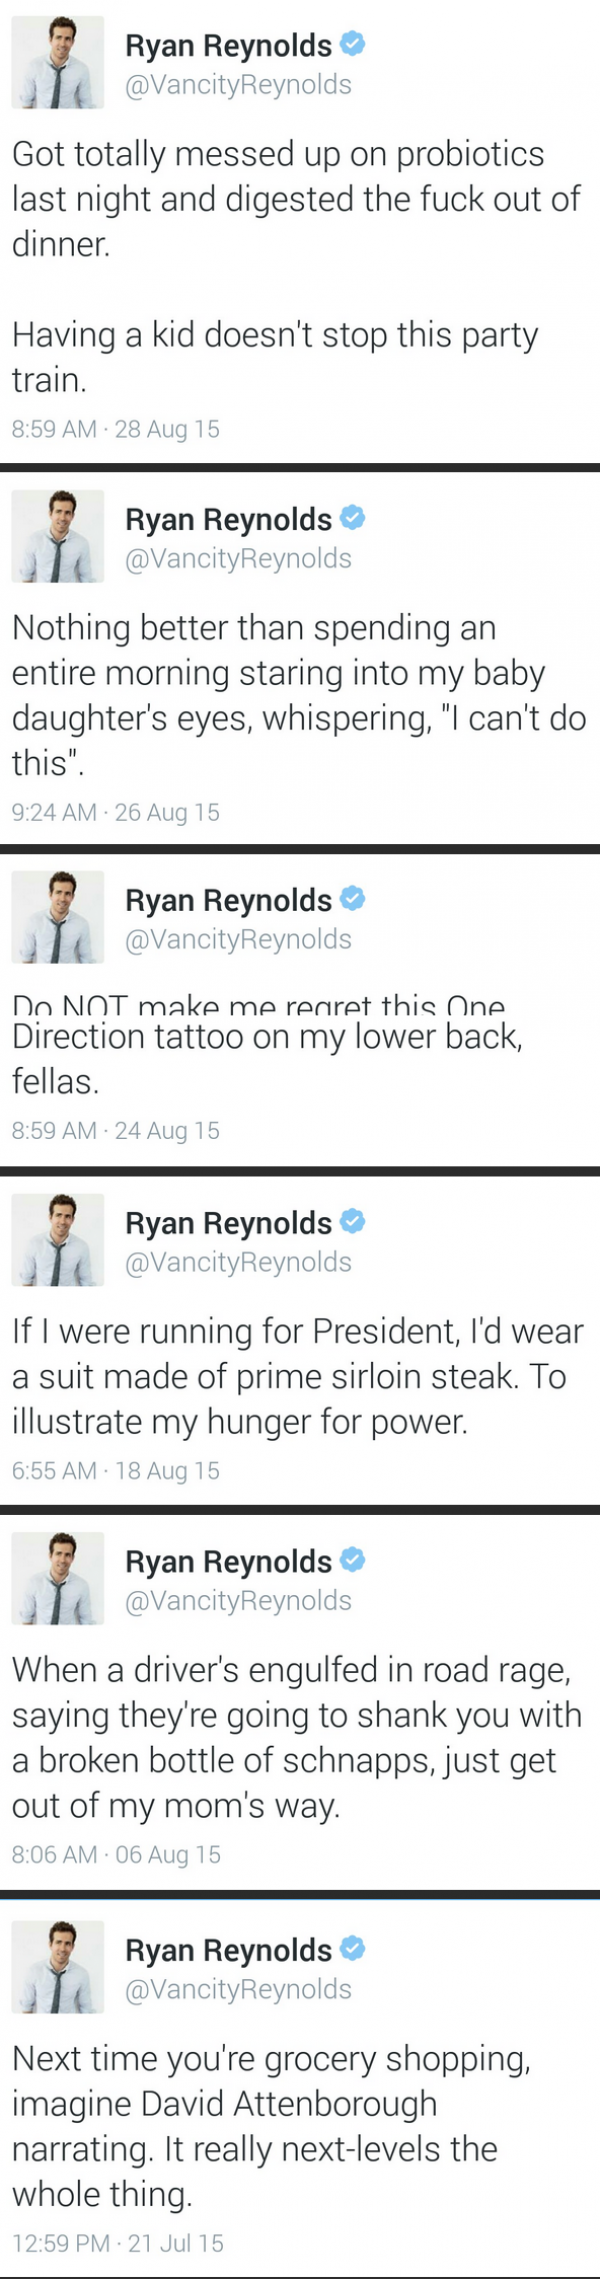 Ryan Reynolds Twitter is my new favorite thing